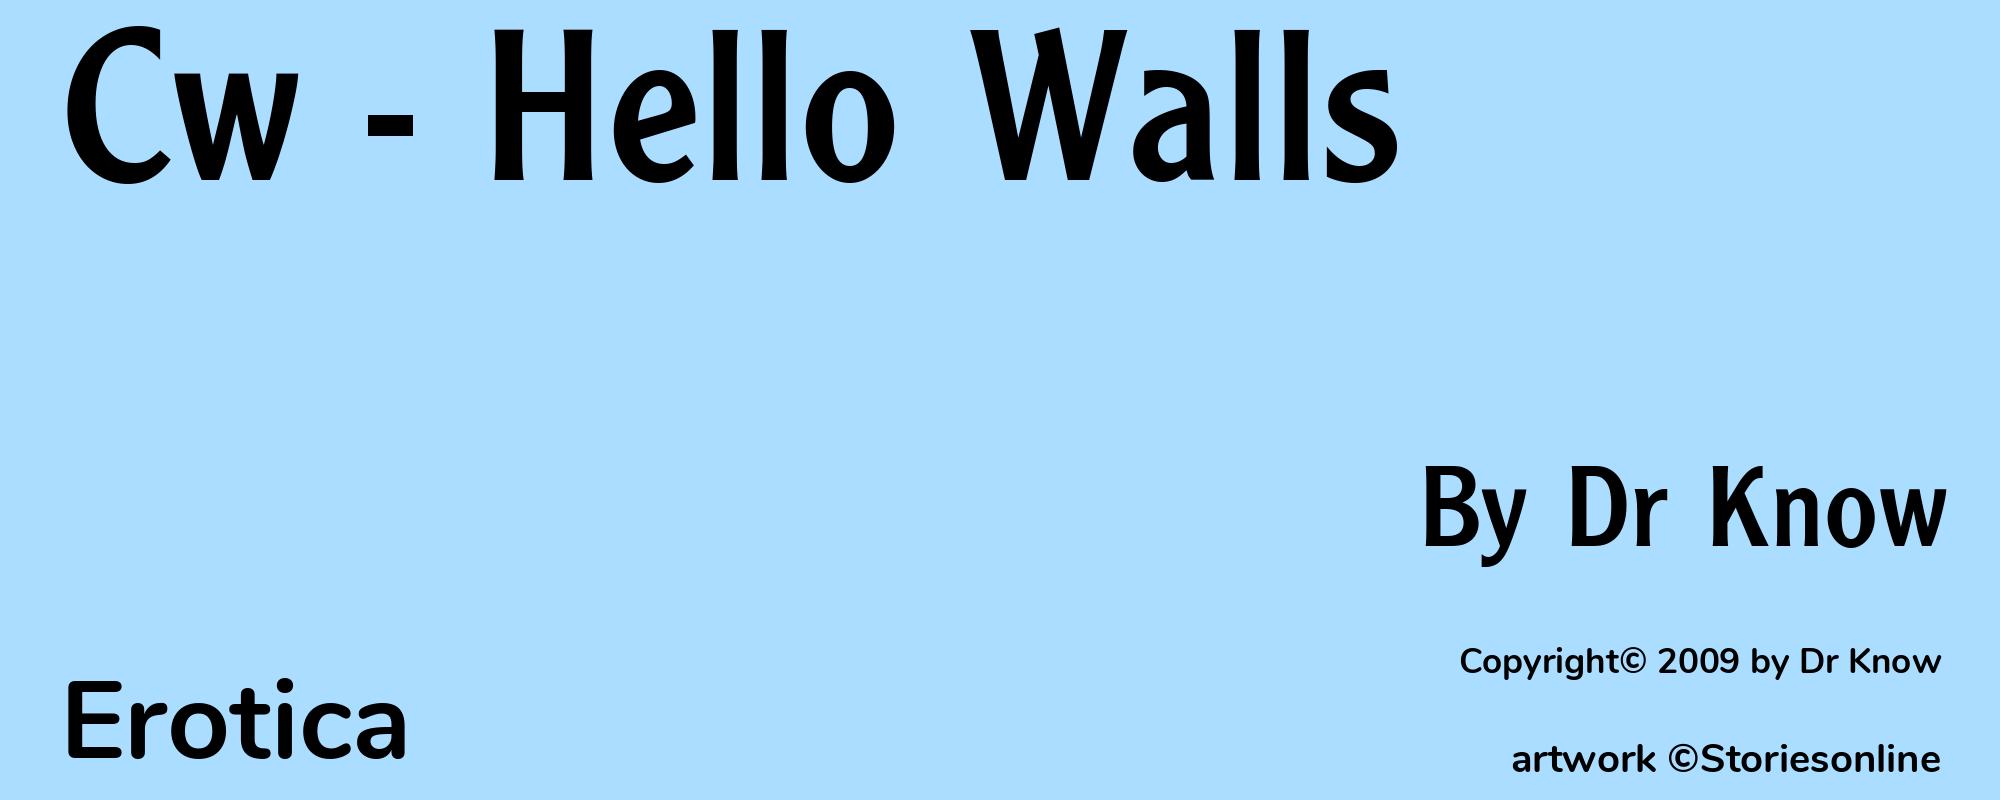 Cw - Hello Walls - Cover